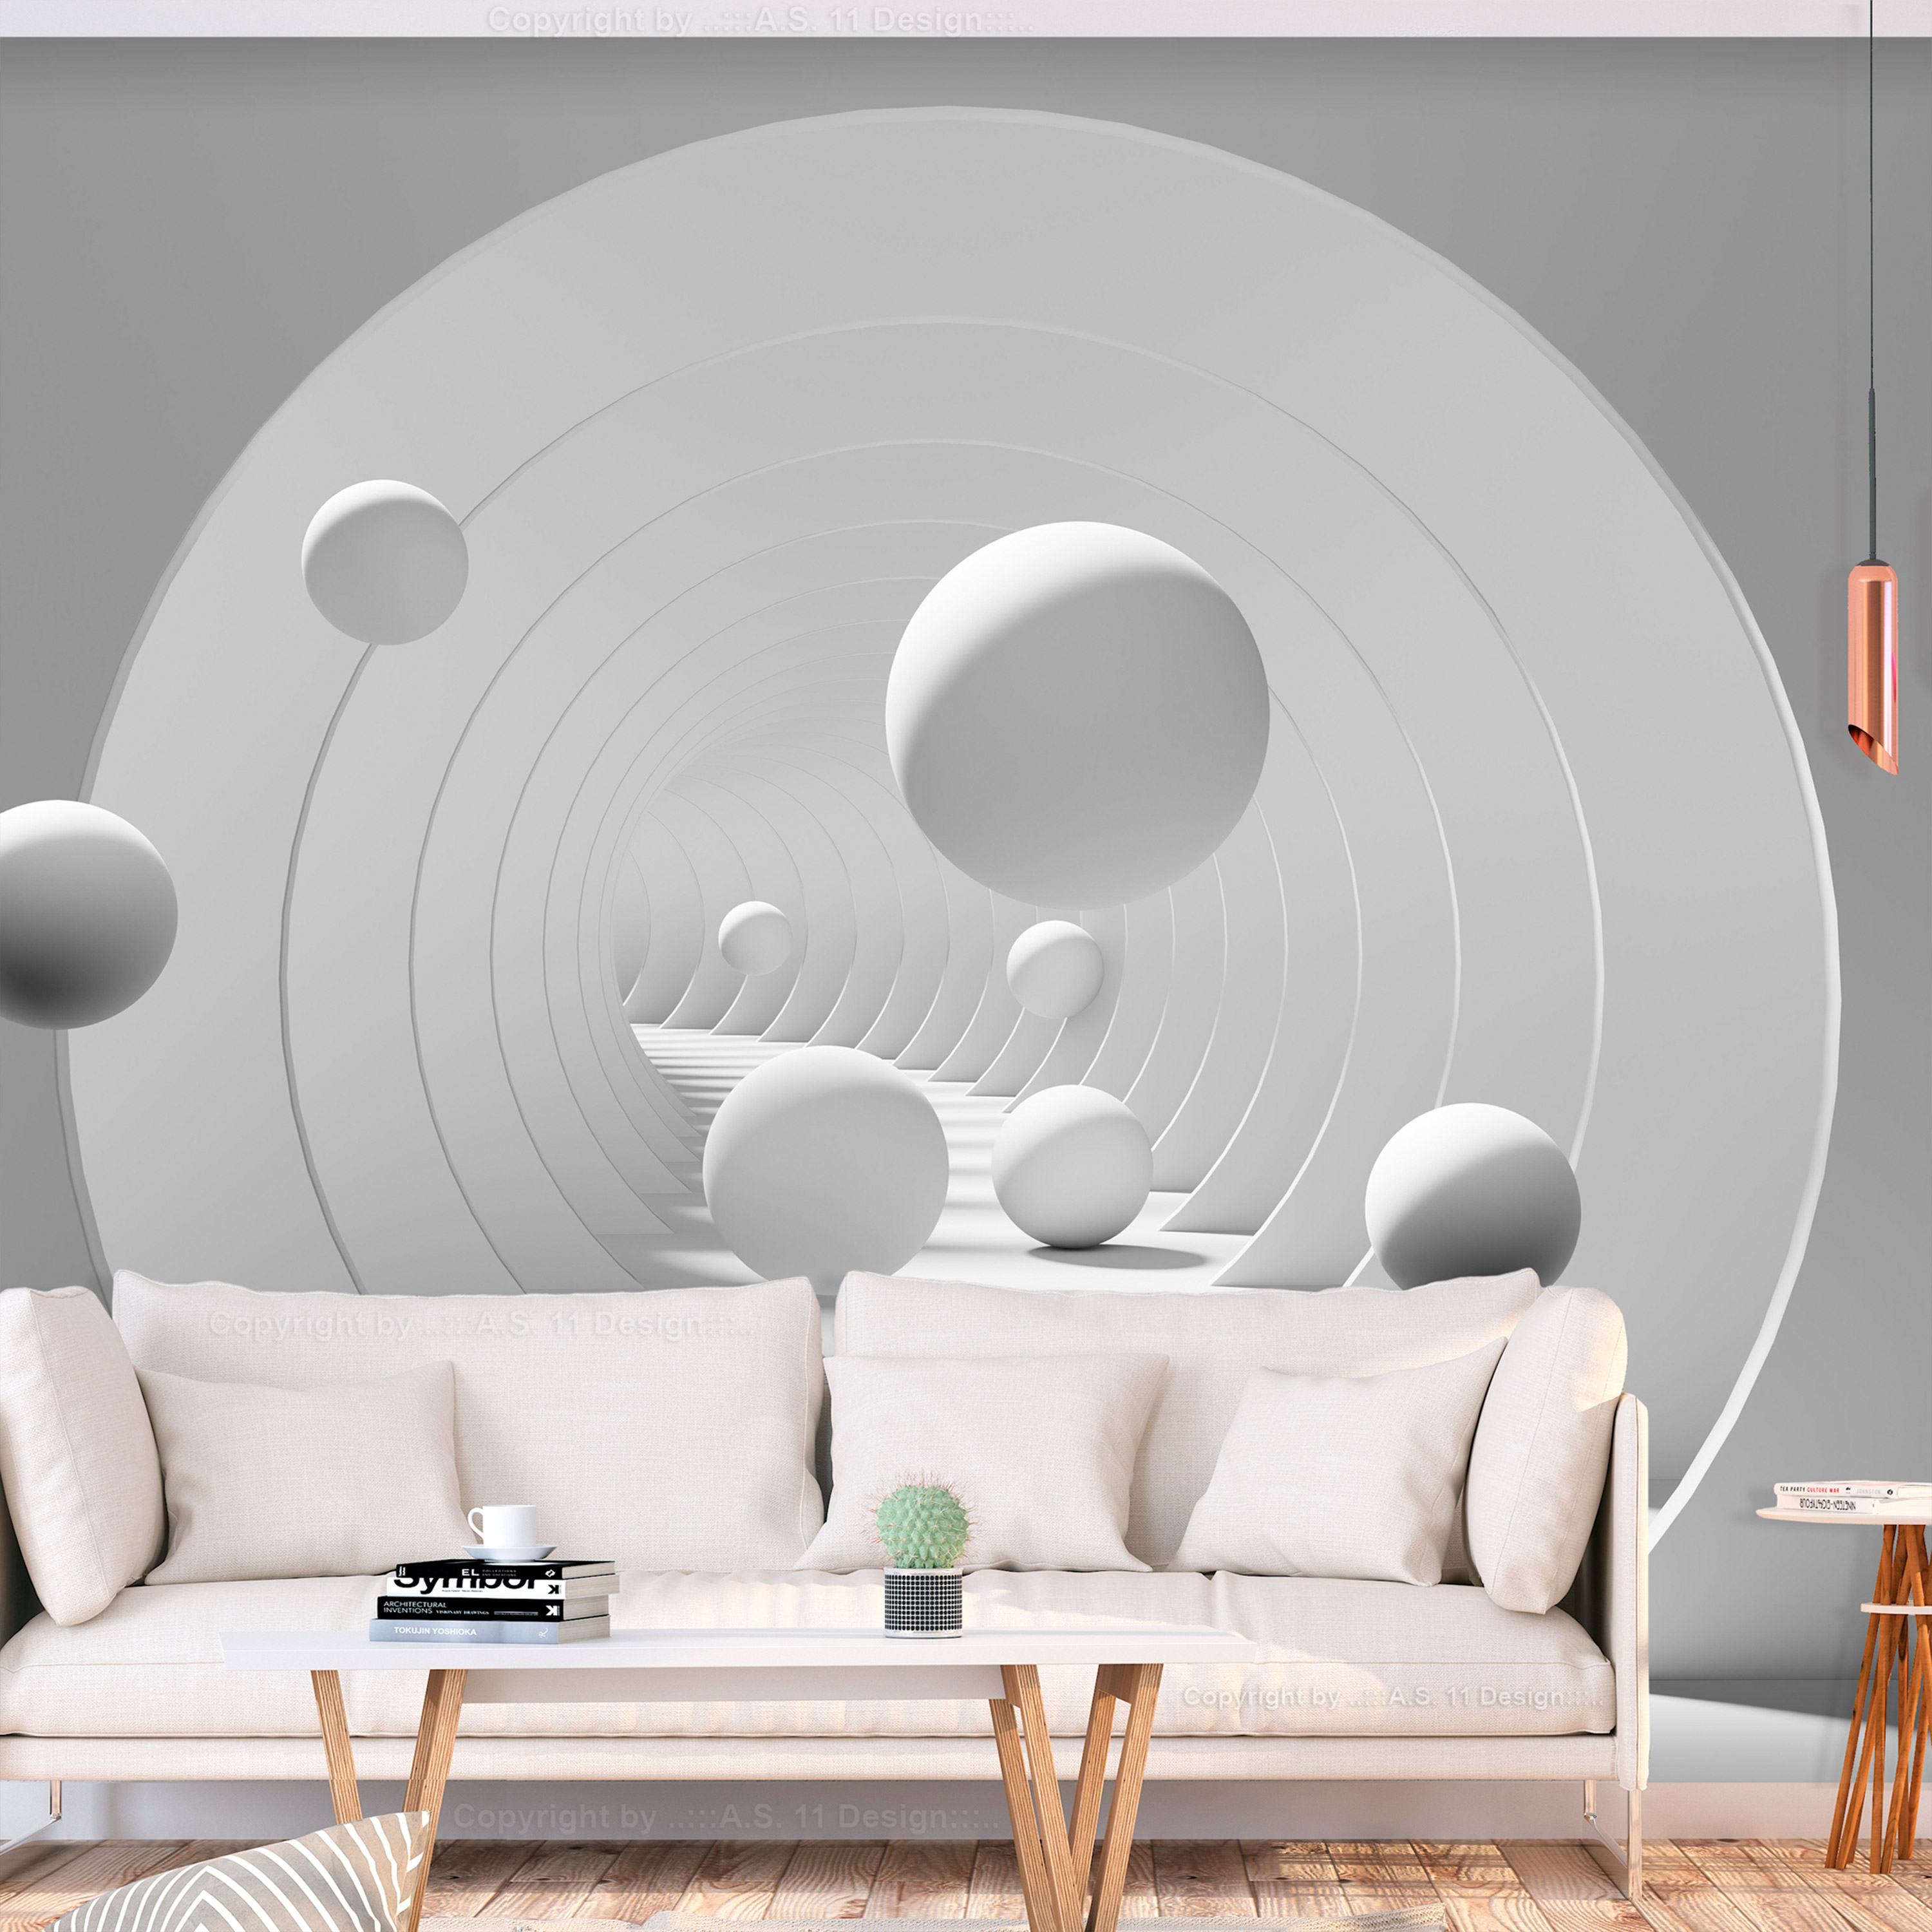 Self-adhesive Wallpaper - Oblivion Tunnel - 98x70